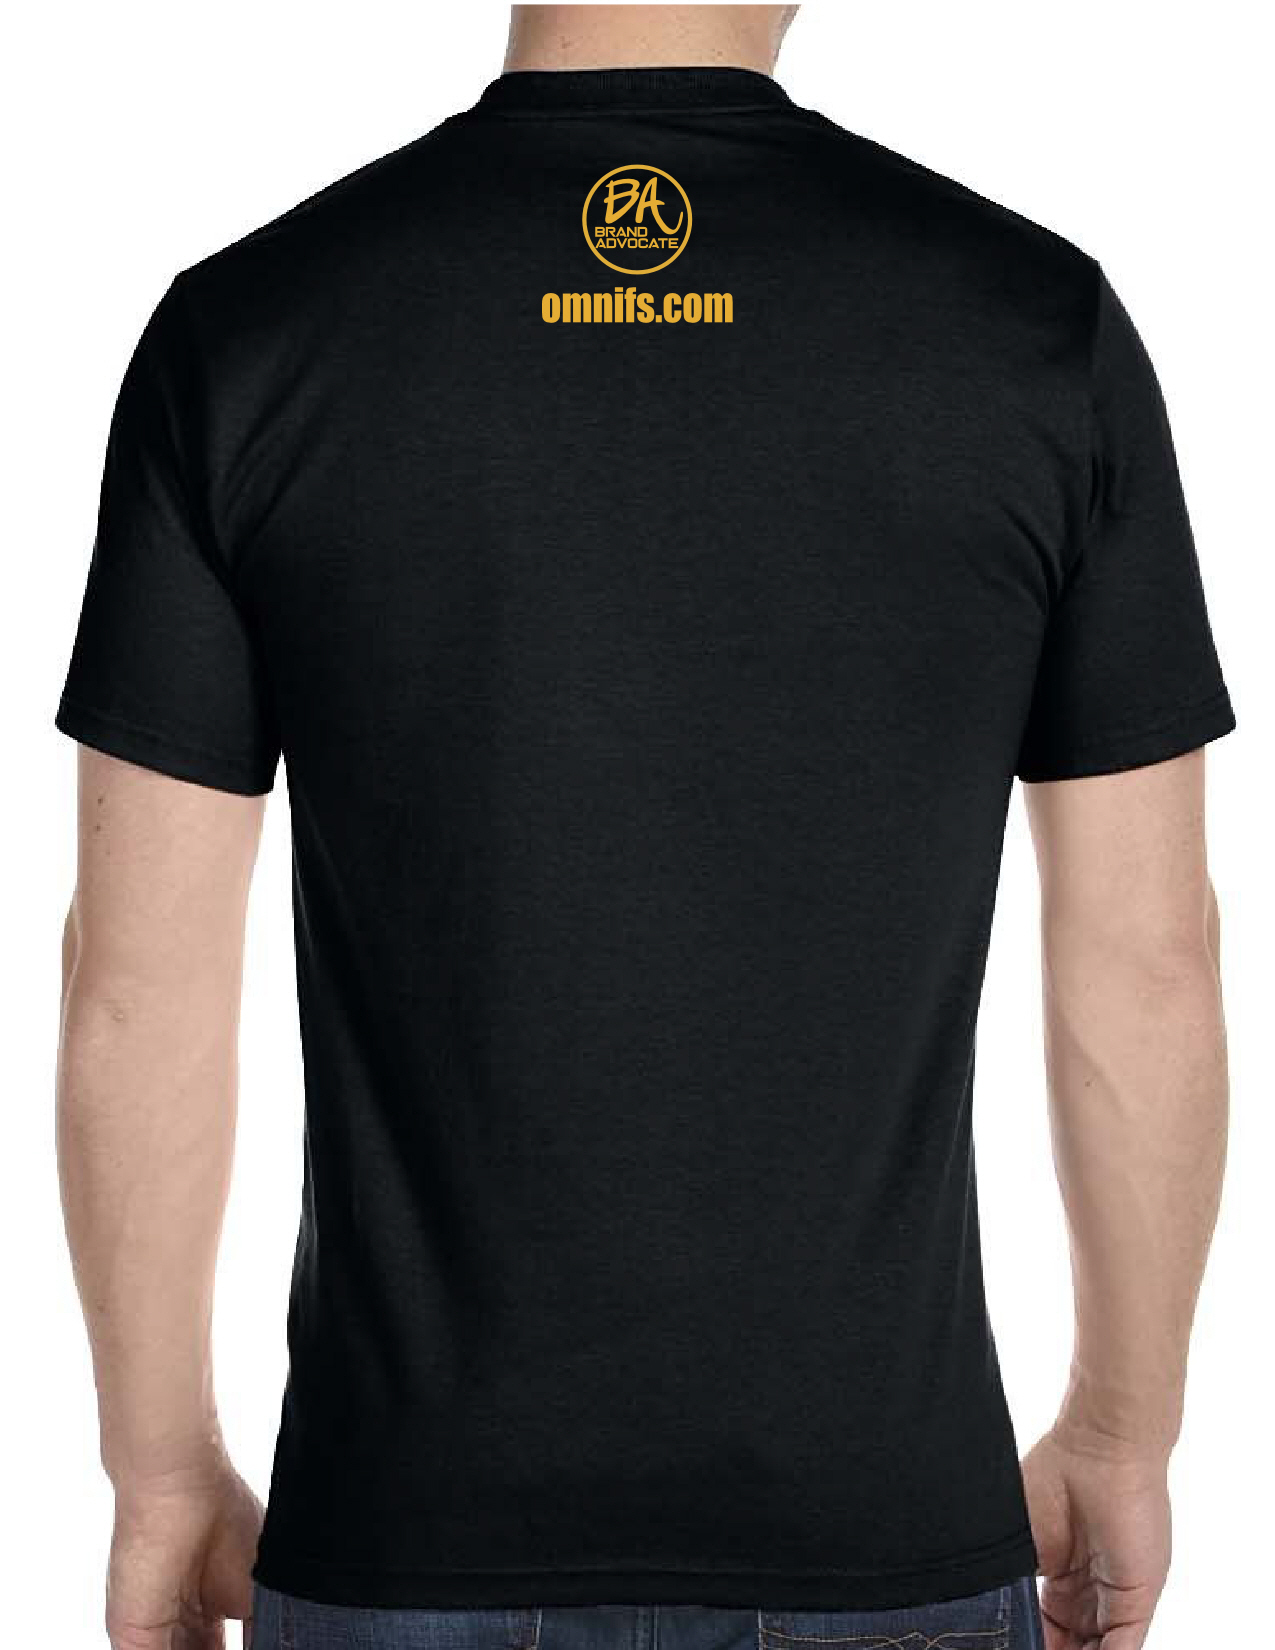 https://omnifs.com/wp-content/uploads/2021/06/Brand-Advocate-T-Shirt-BACK-BLACK.jpg